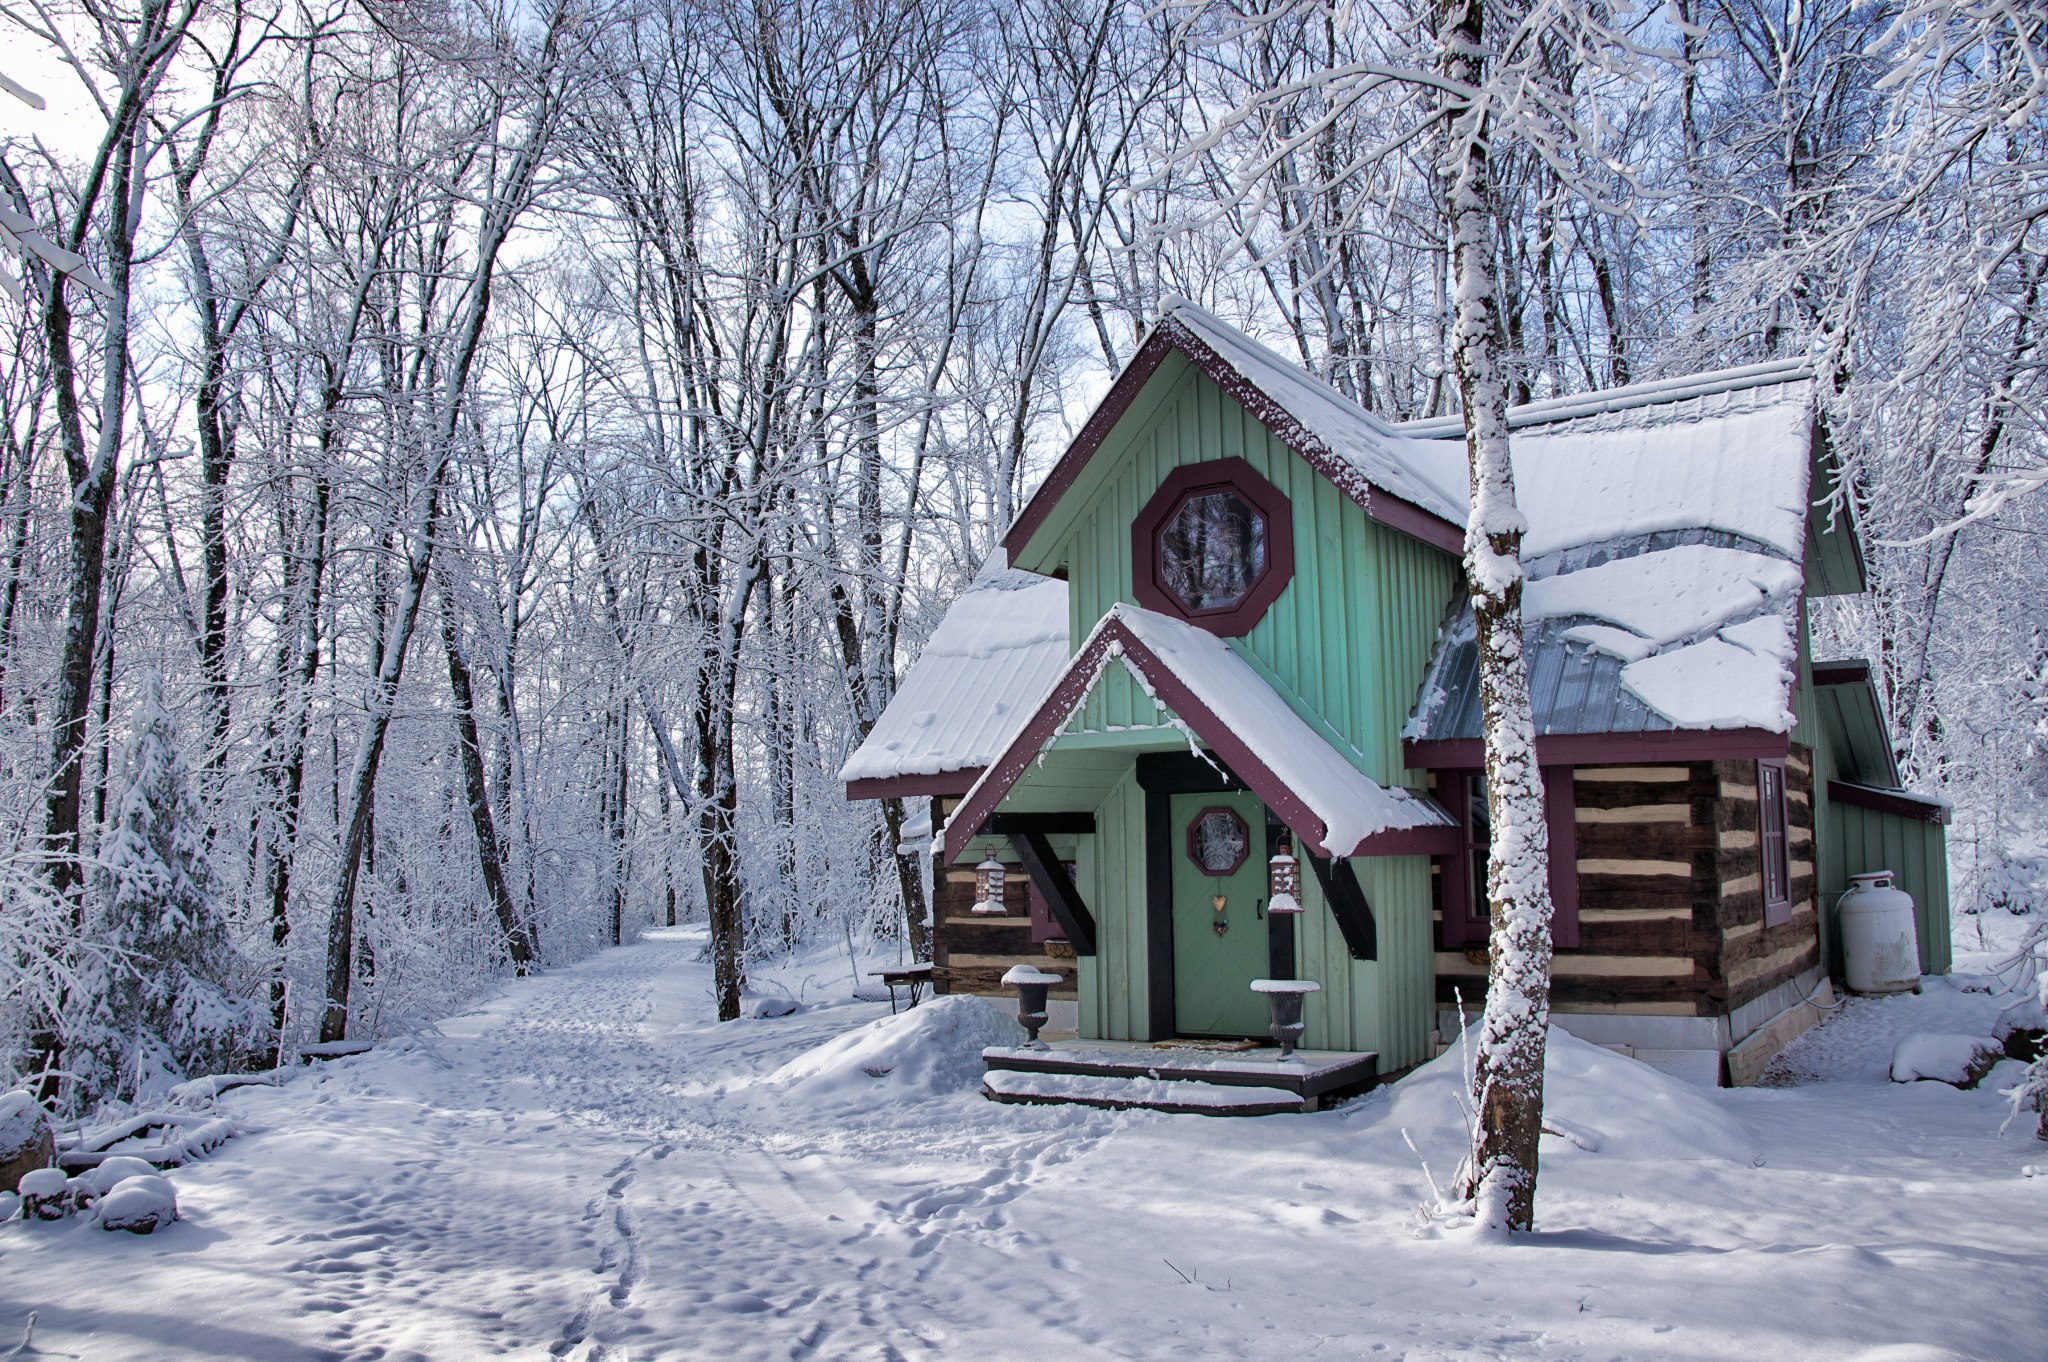 Highlander House log cabin nestled in the winter forest